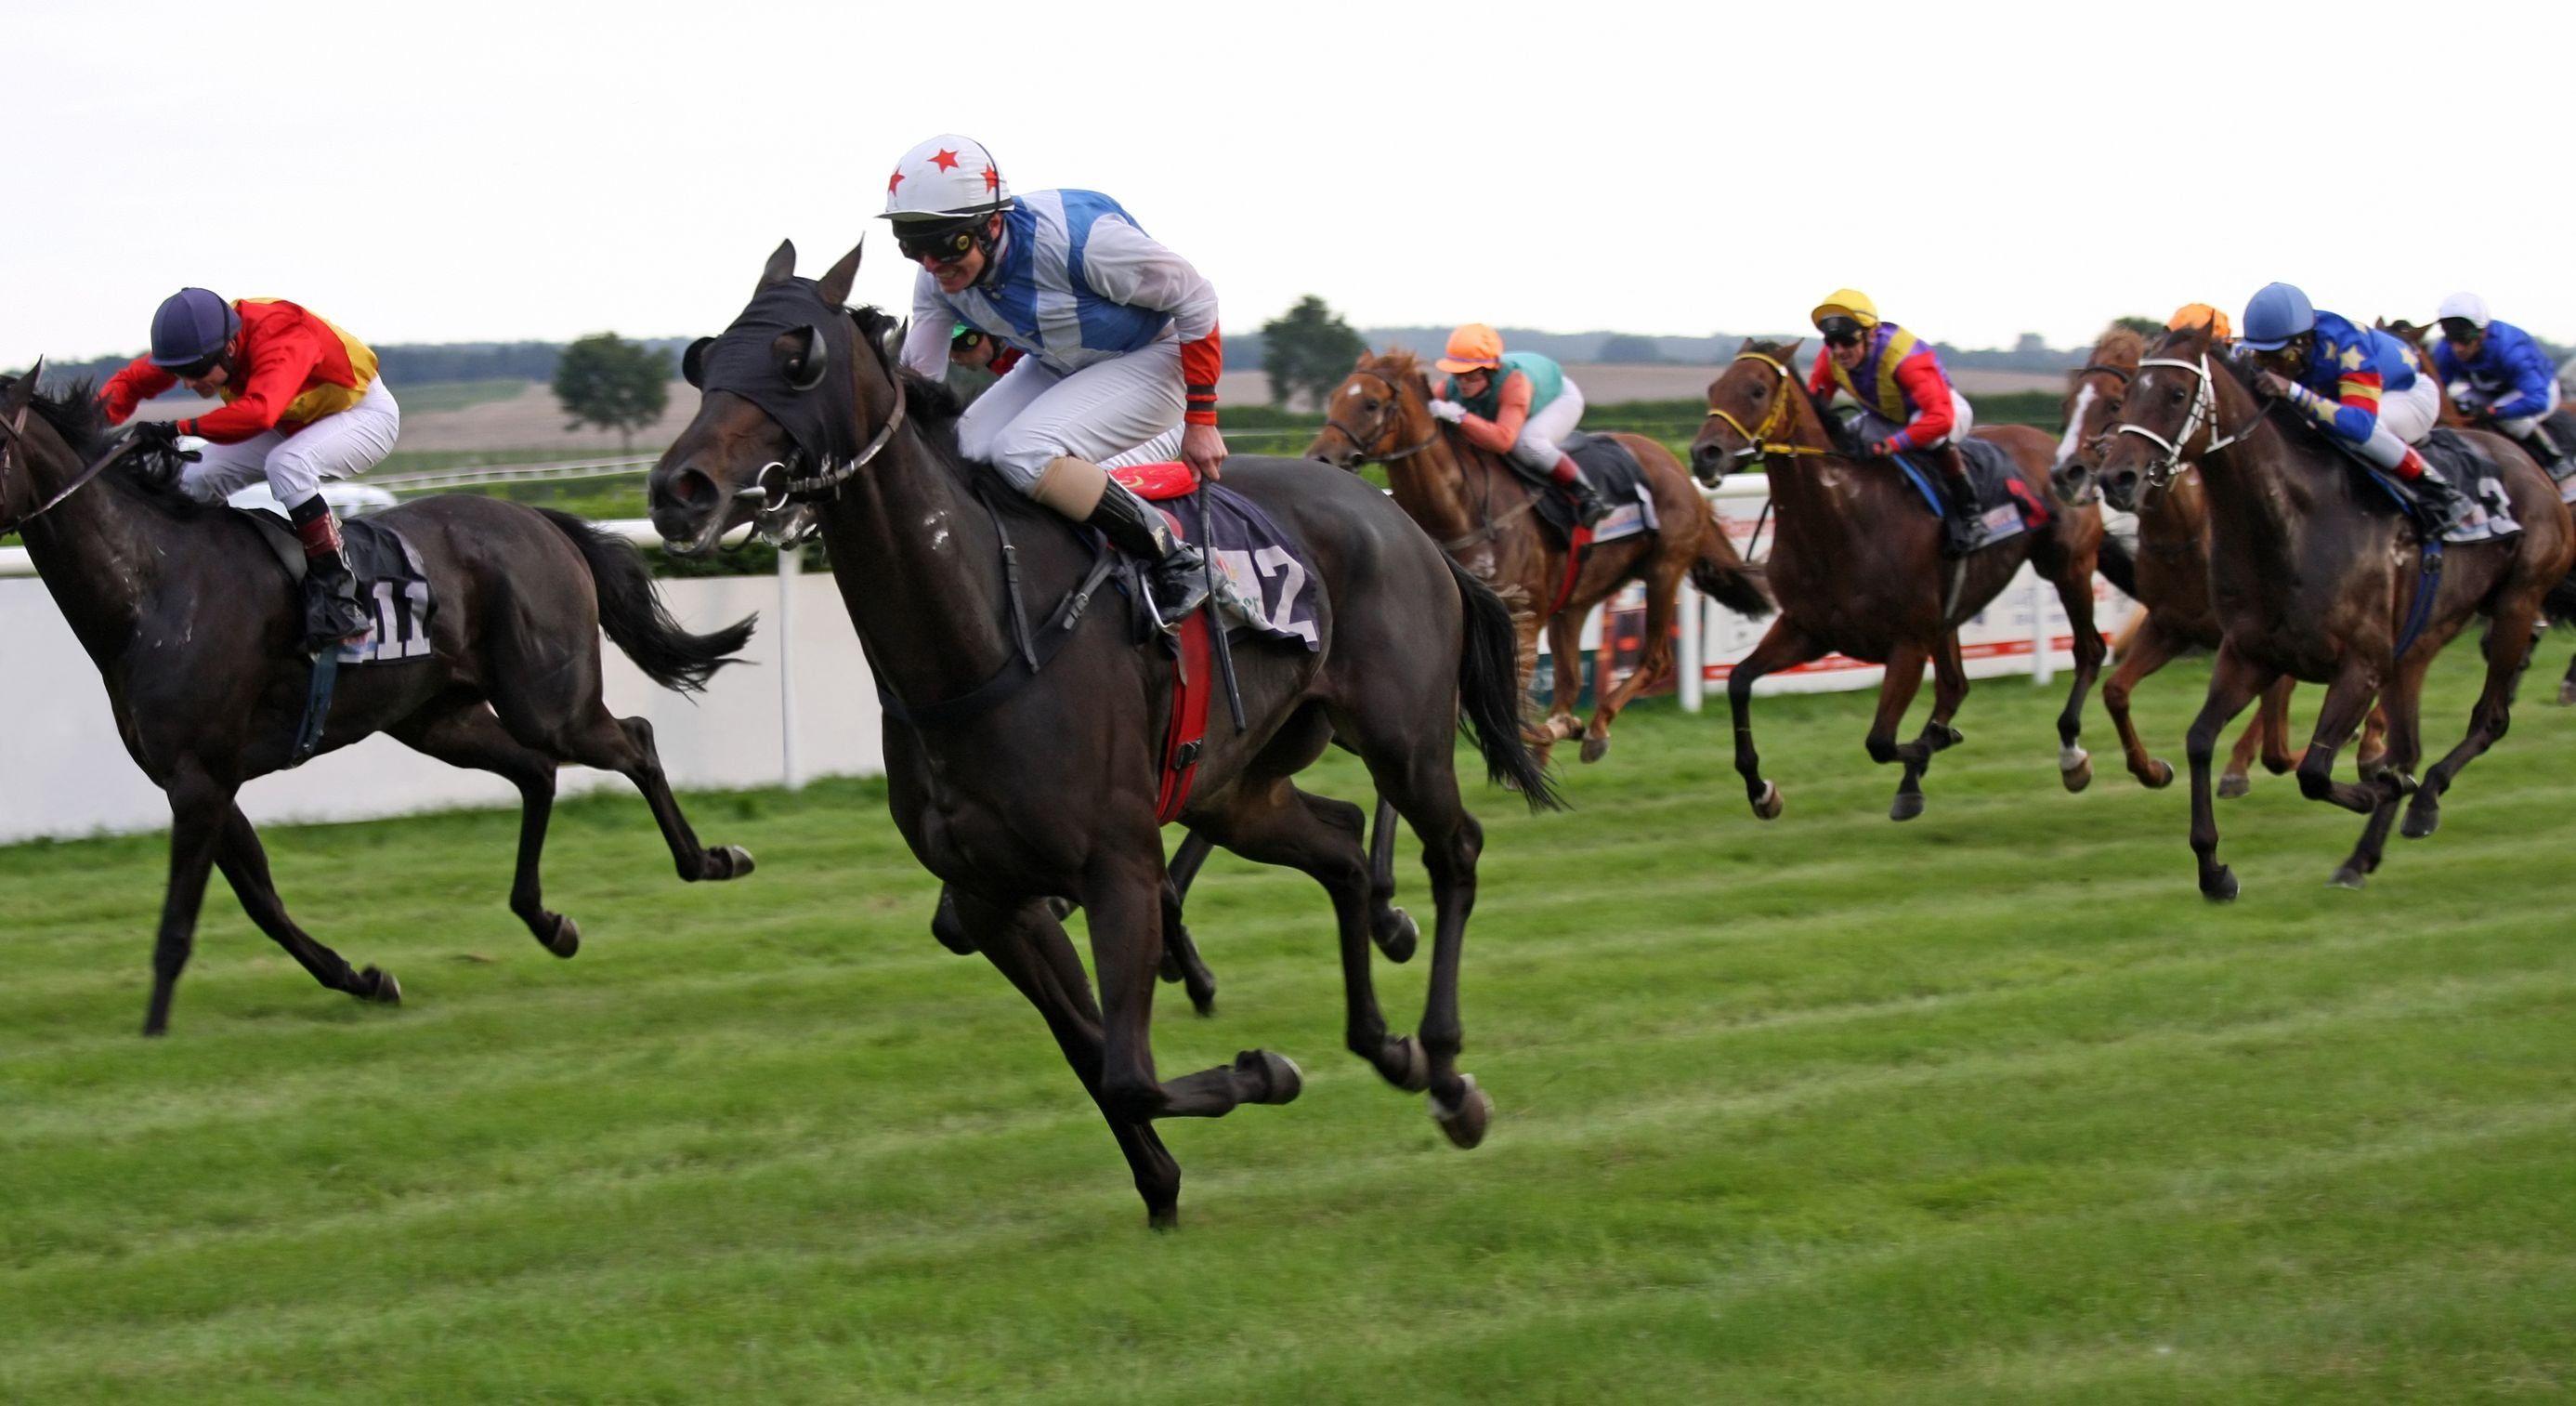 HORSE RACING race equestrian sport jockey horses wallpaper